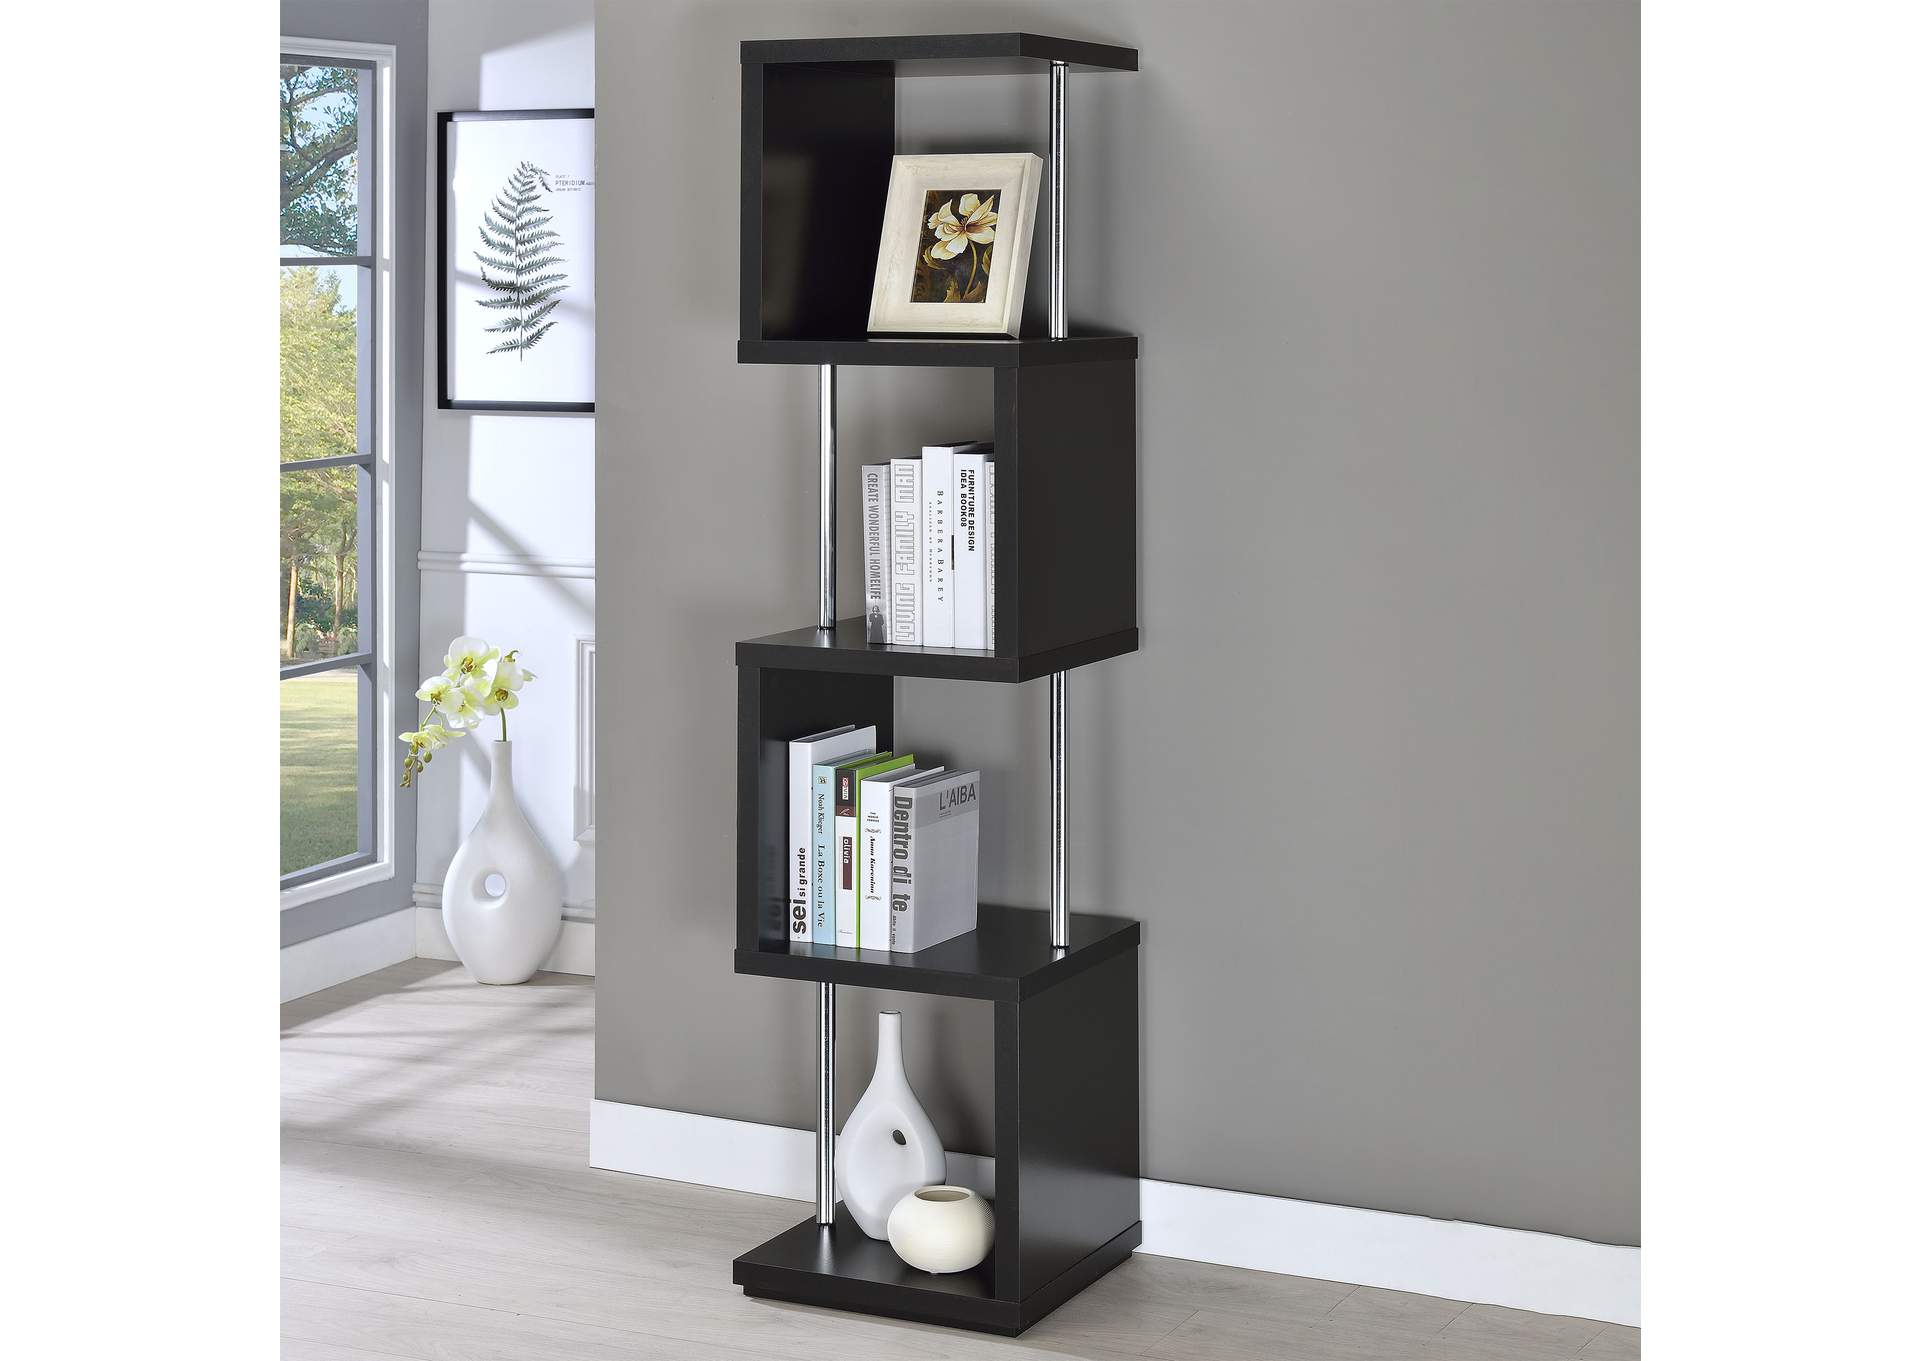 Baxter 4-shelf Bookcase Black and Chrome,Coaster Furniture